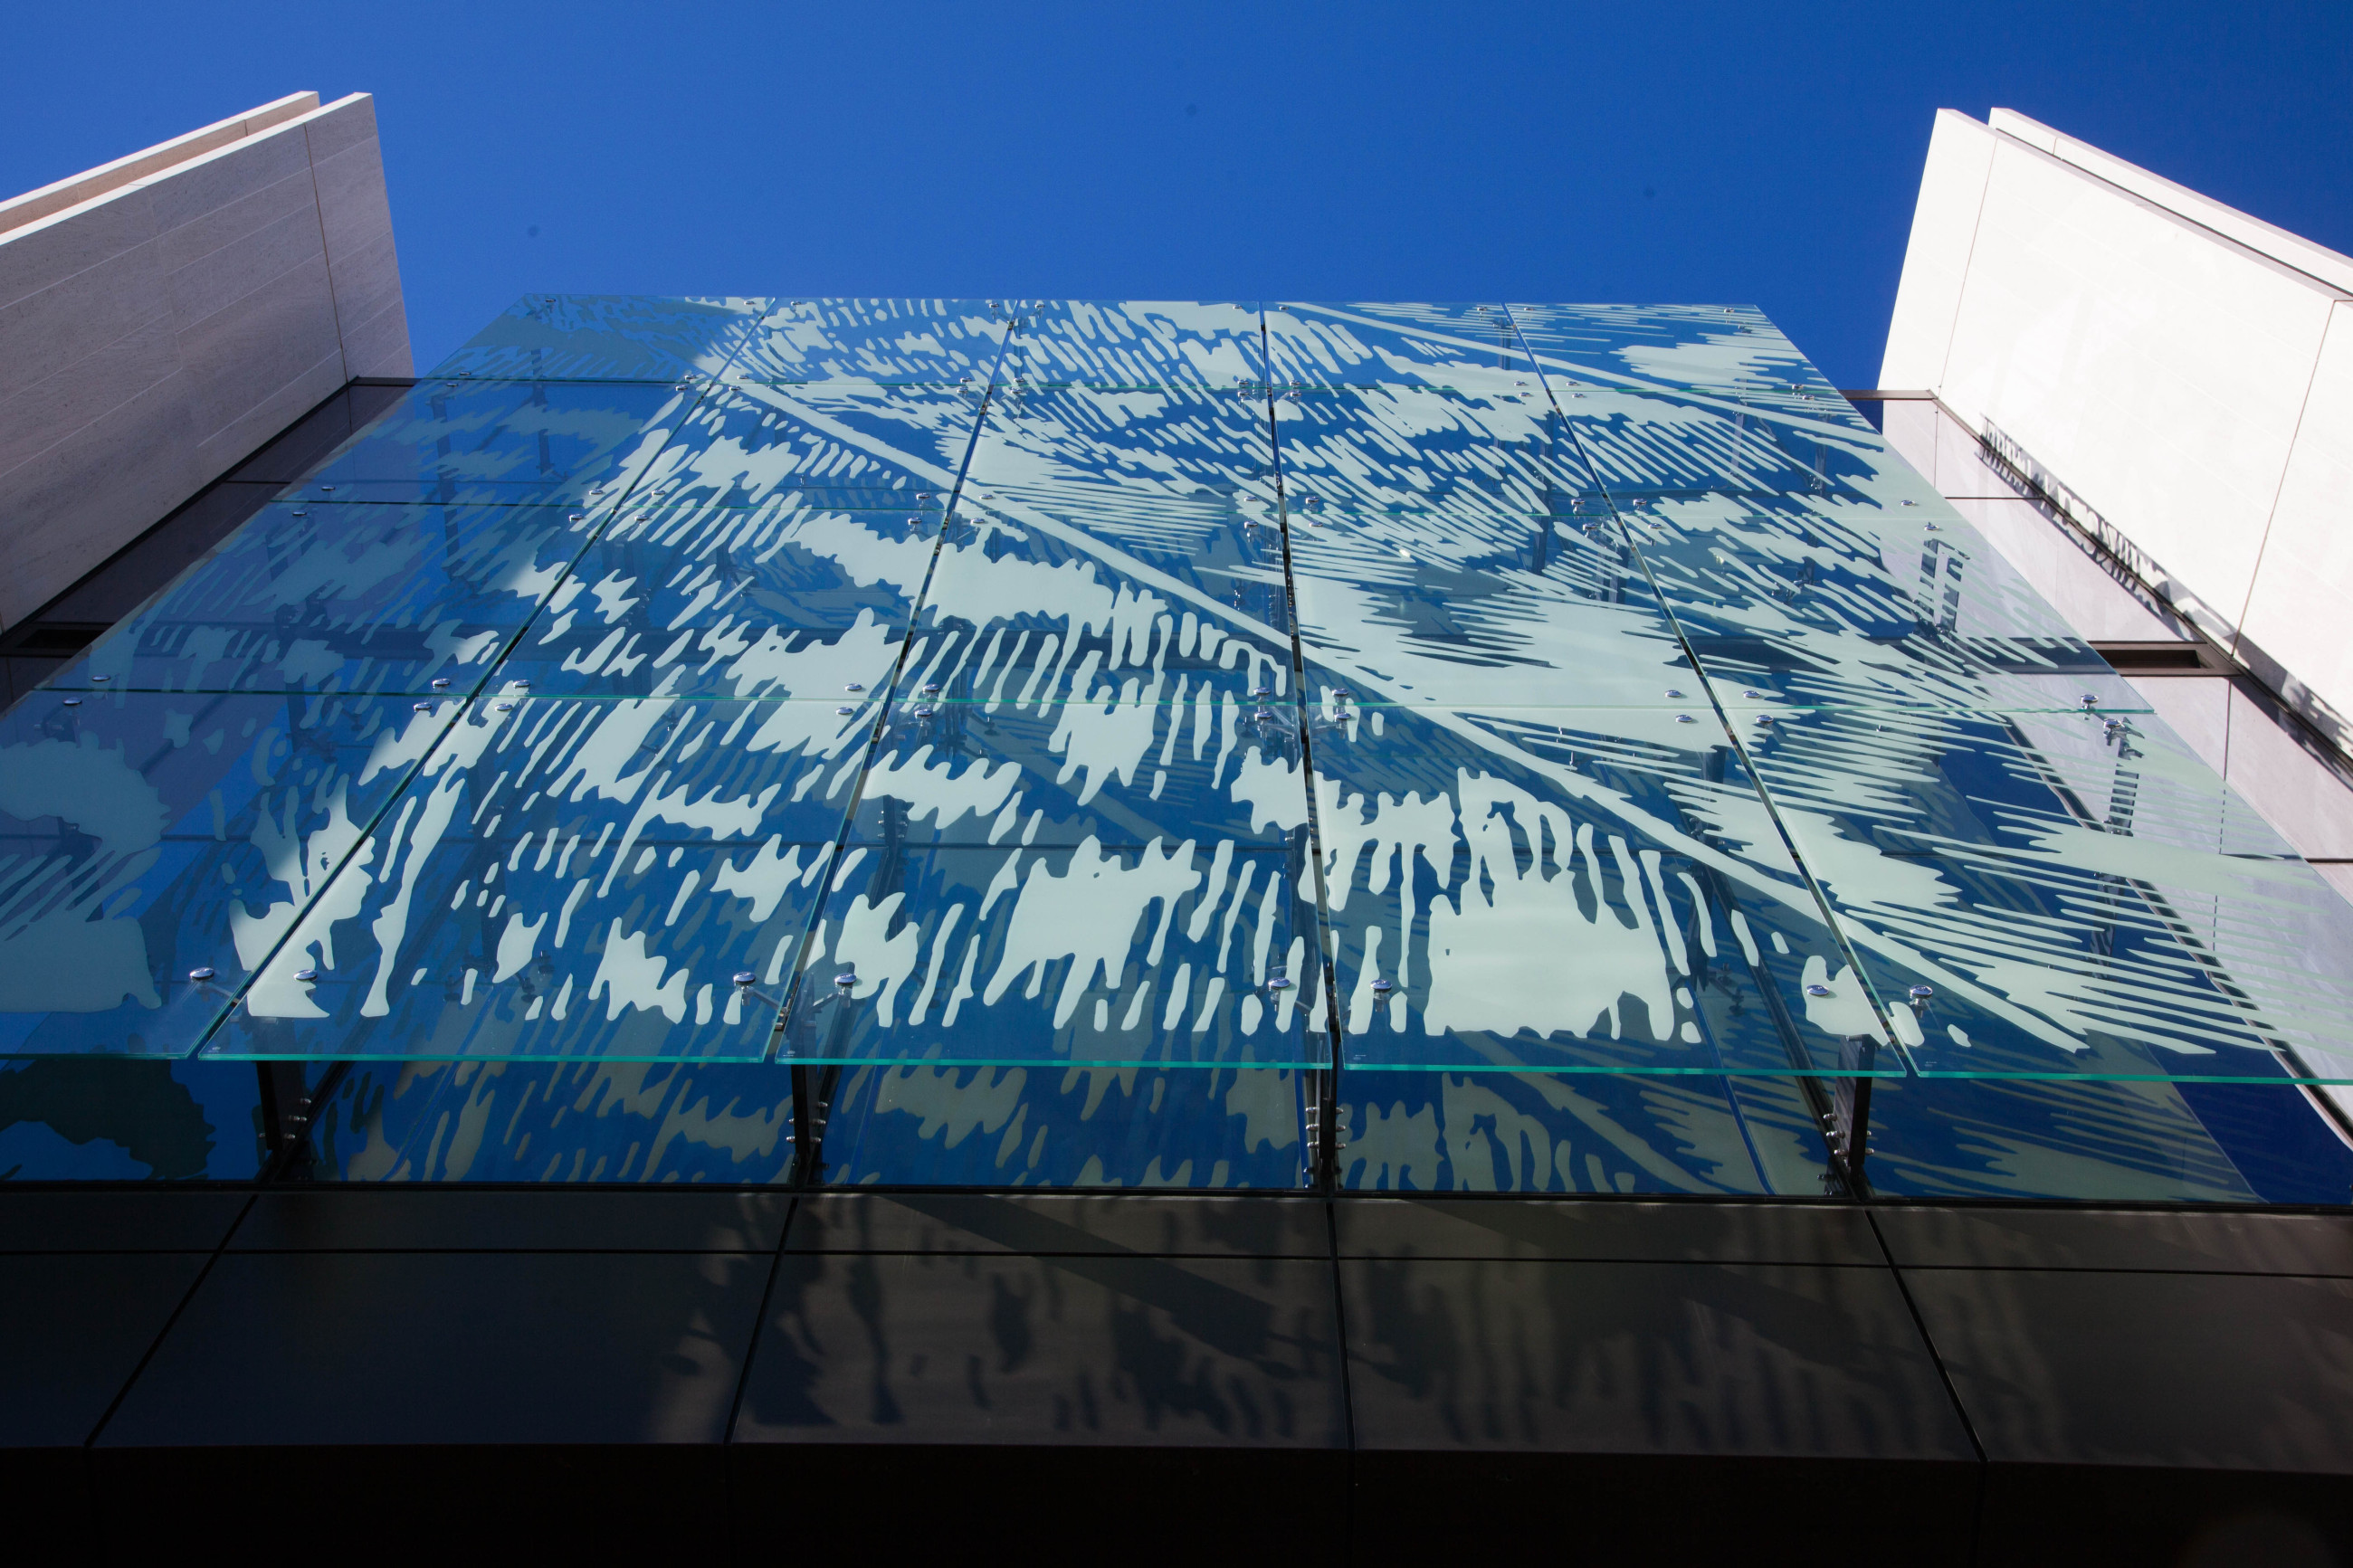 Exterior of Christchurch Justice Precinct with intricate facade design